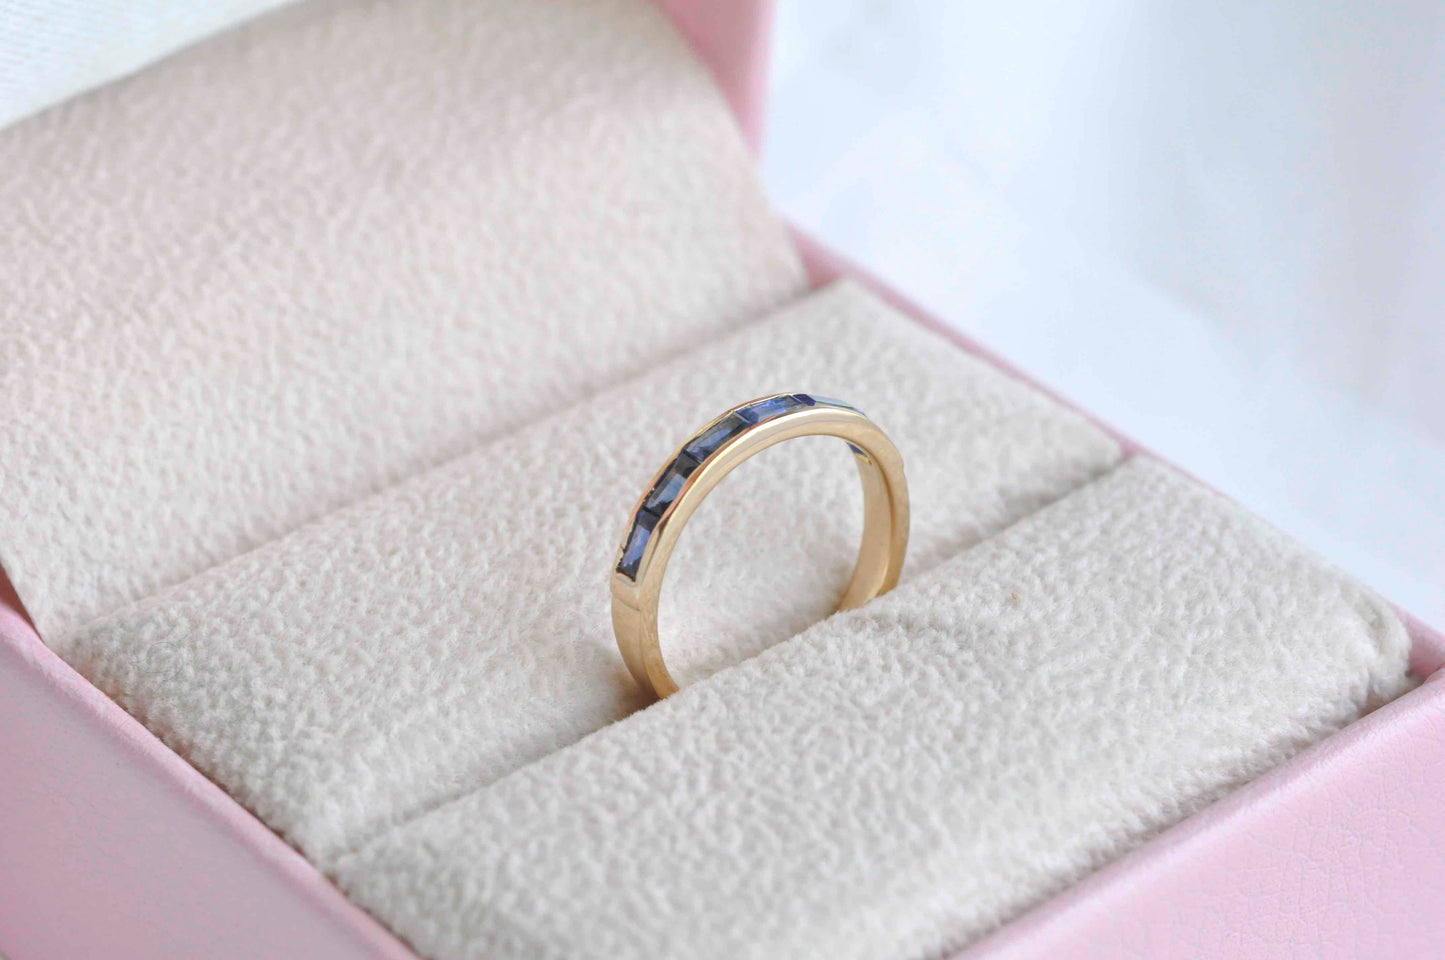 Fashionable blue half band ring